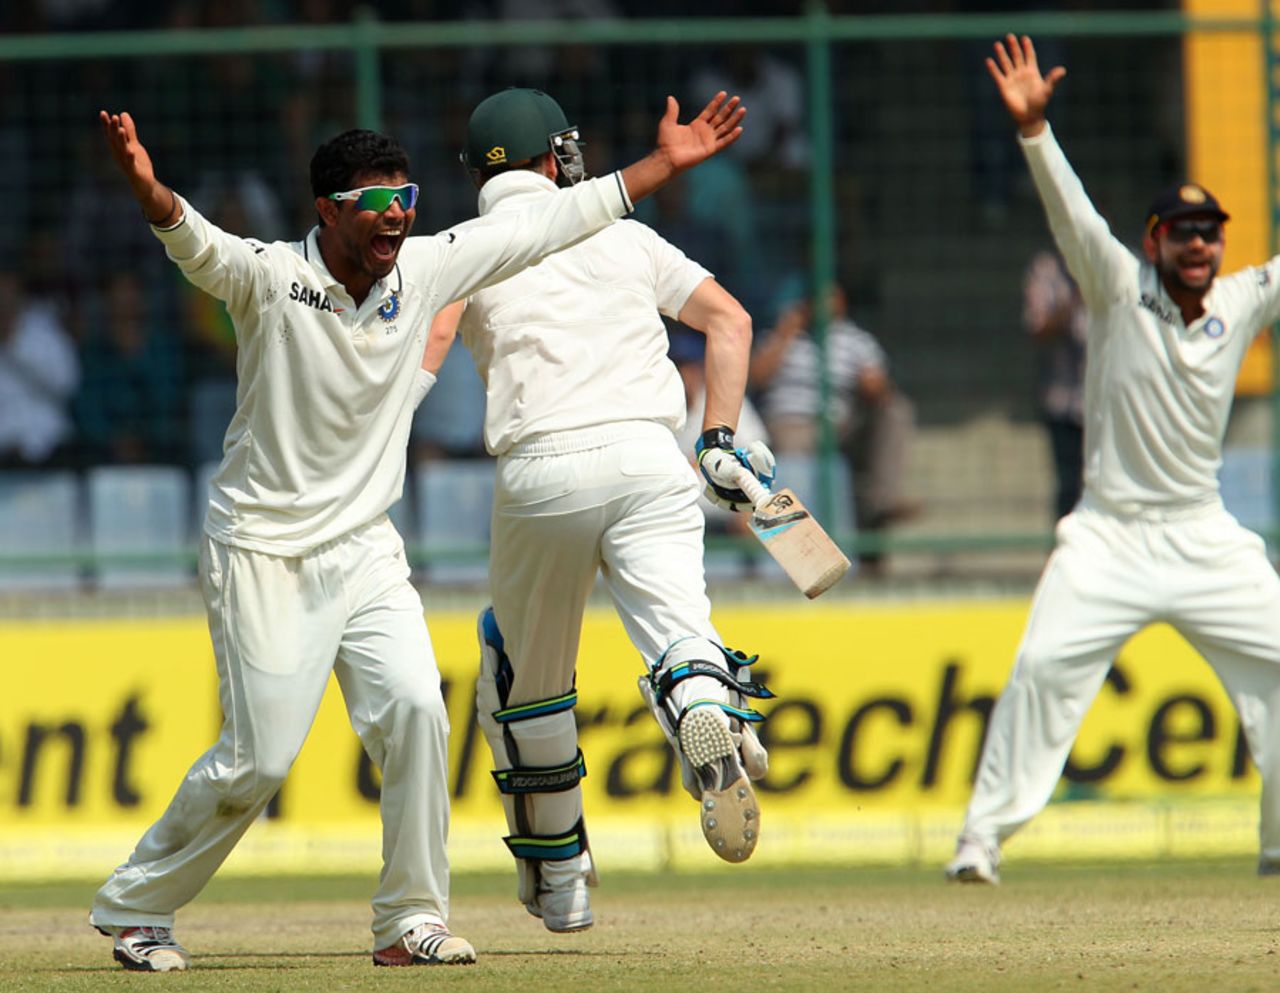 Ravindra Jadeja appeals for a wicket, India v Australia, 4th Test, Delhi, 3rd day, March 24, 2013